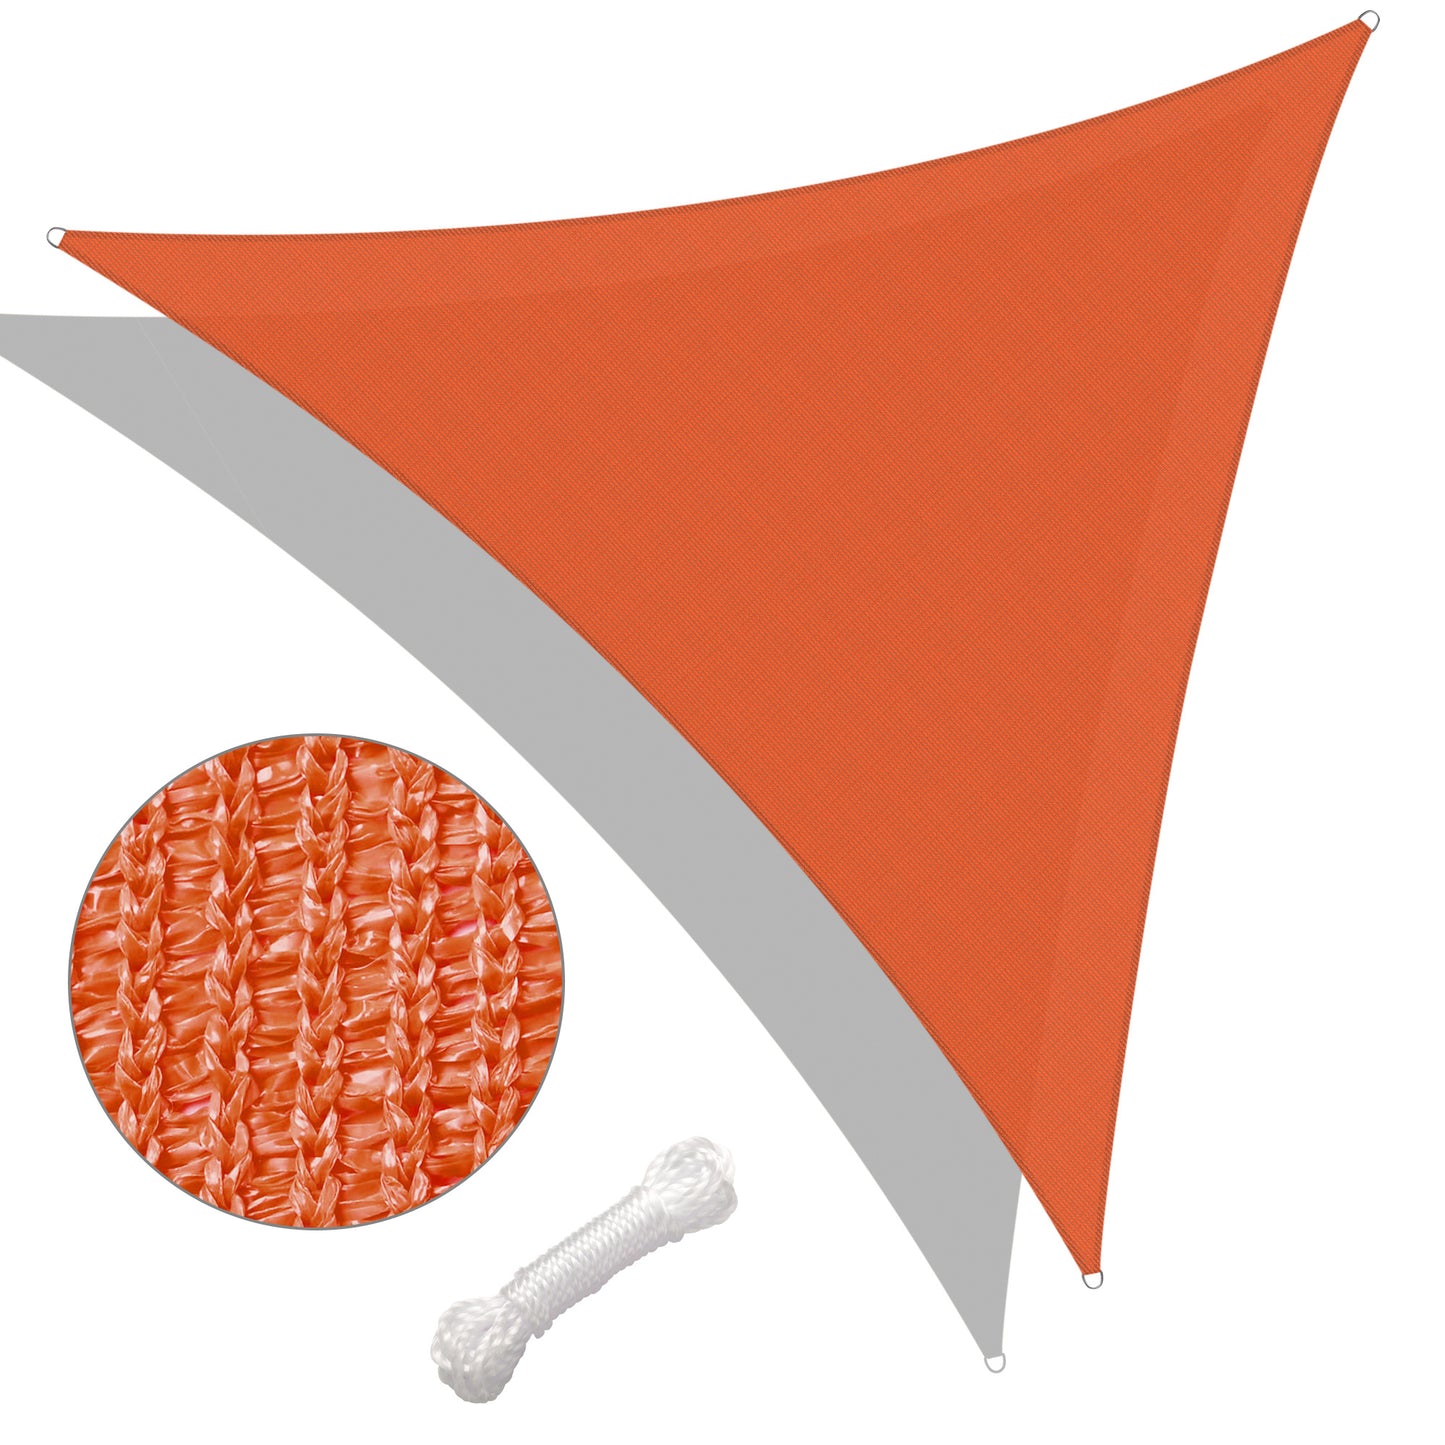 25'x25'x25' Triangle Sun Shade Sail/Bright Orange